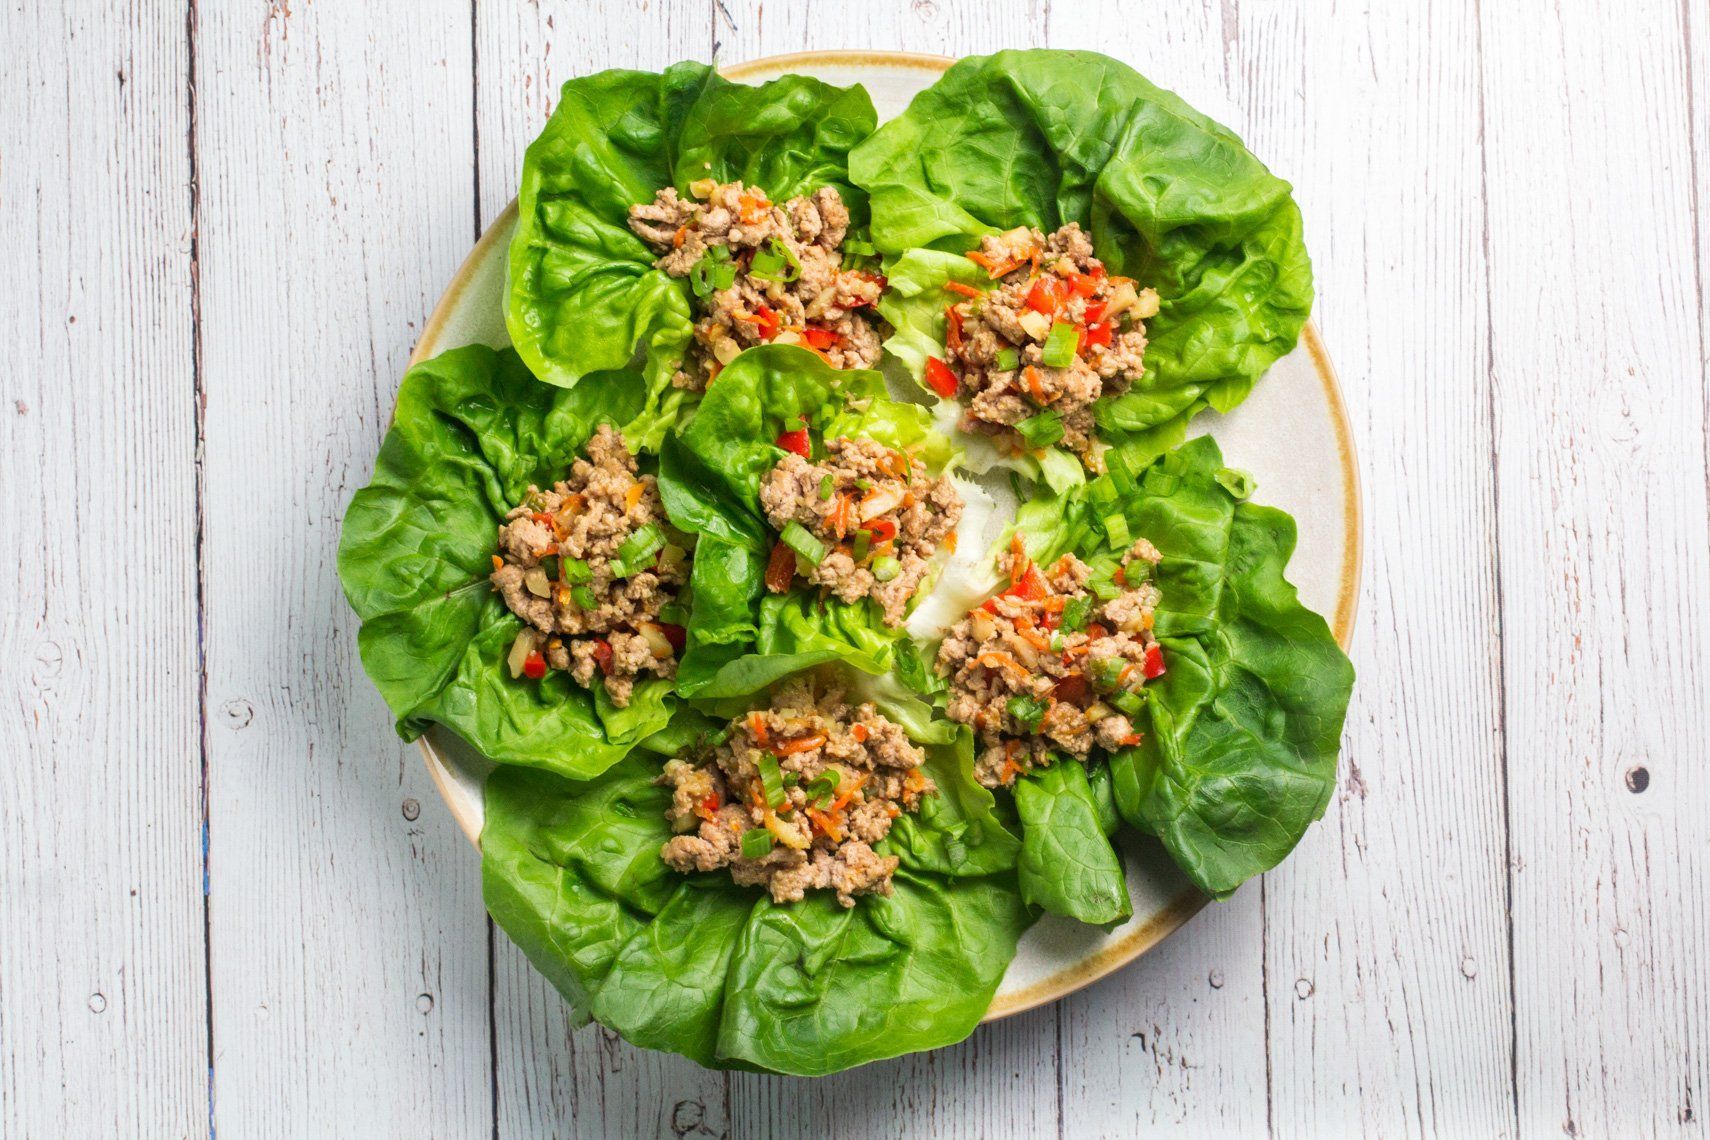 No FODMAP Leafy Green Salad - FODMAP Everyday